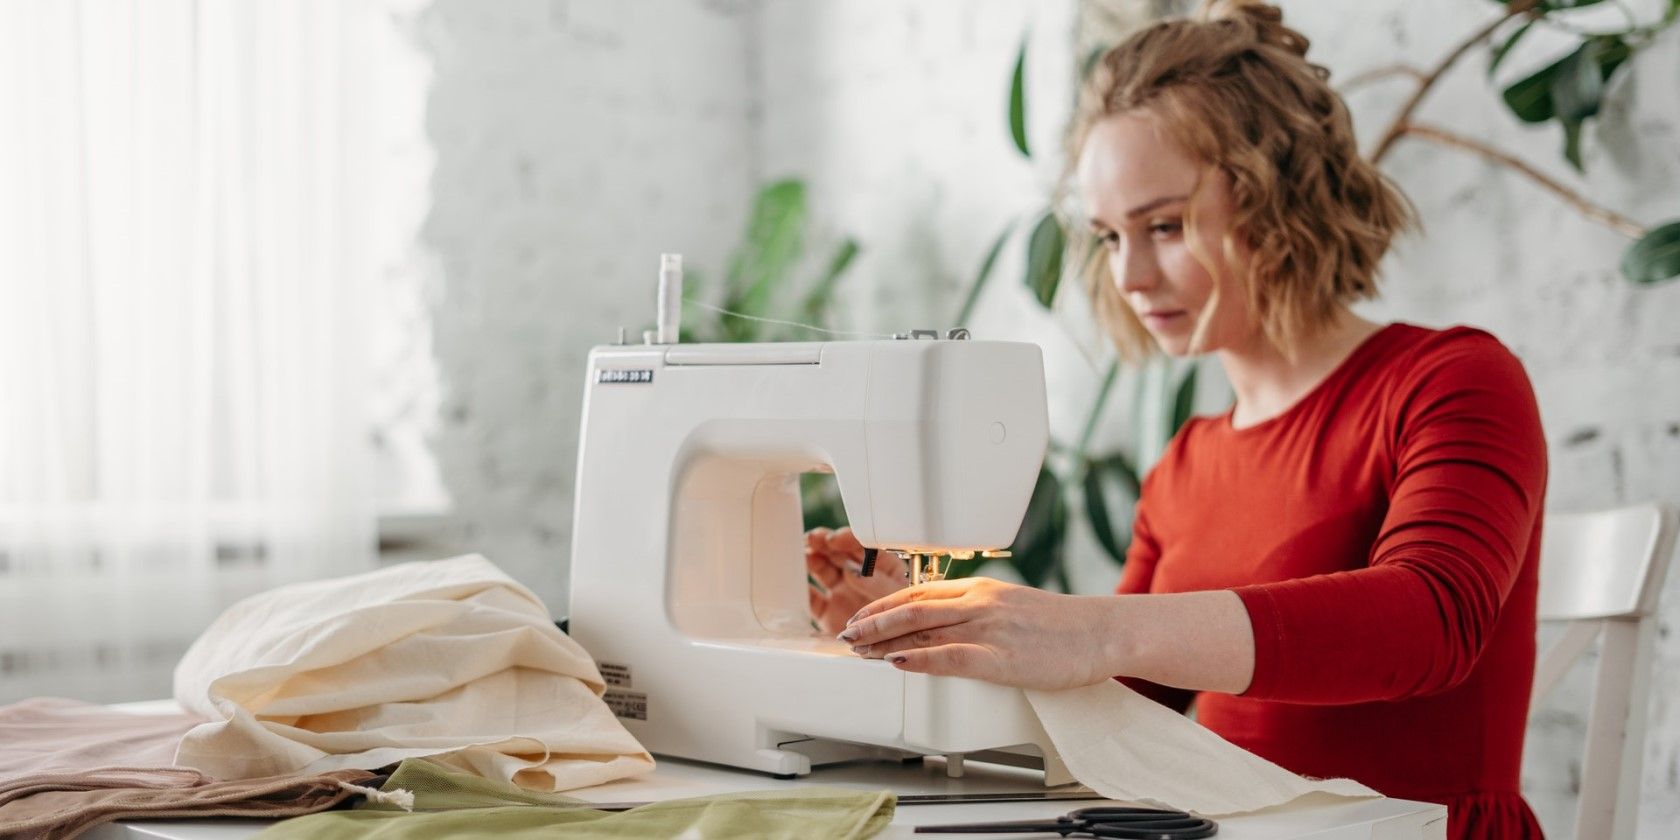 A fashion designer sewing